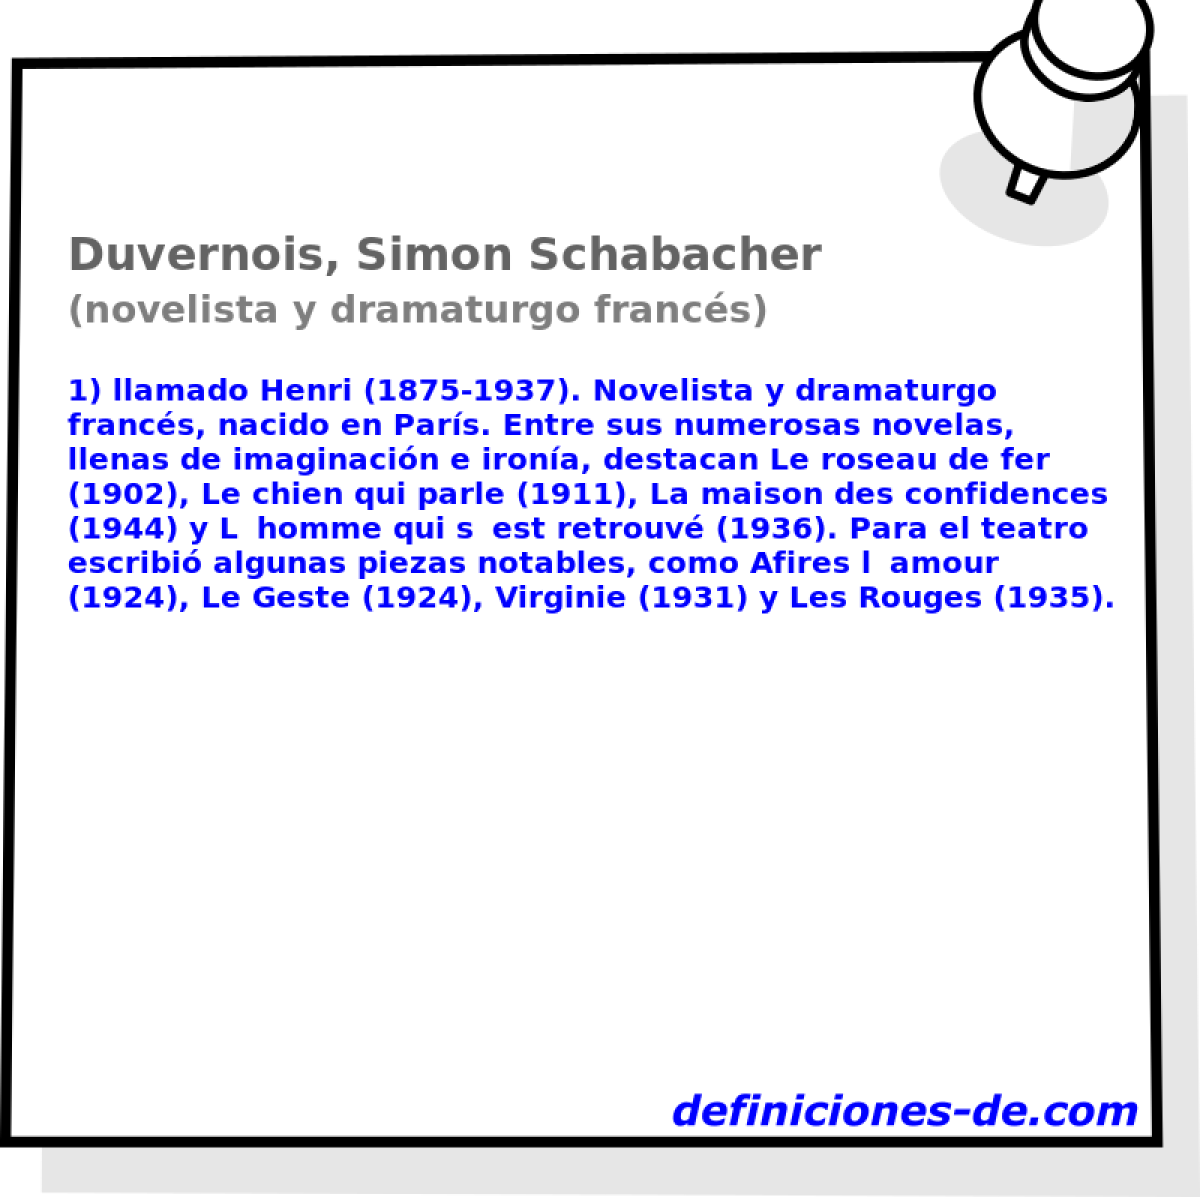 Duvernois, Simon Schabacher (novelista y dramaturgo francs)